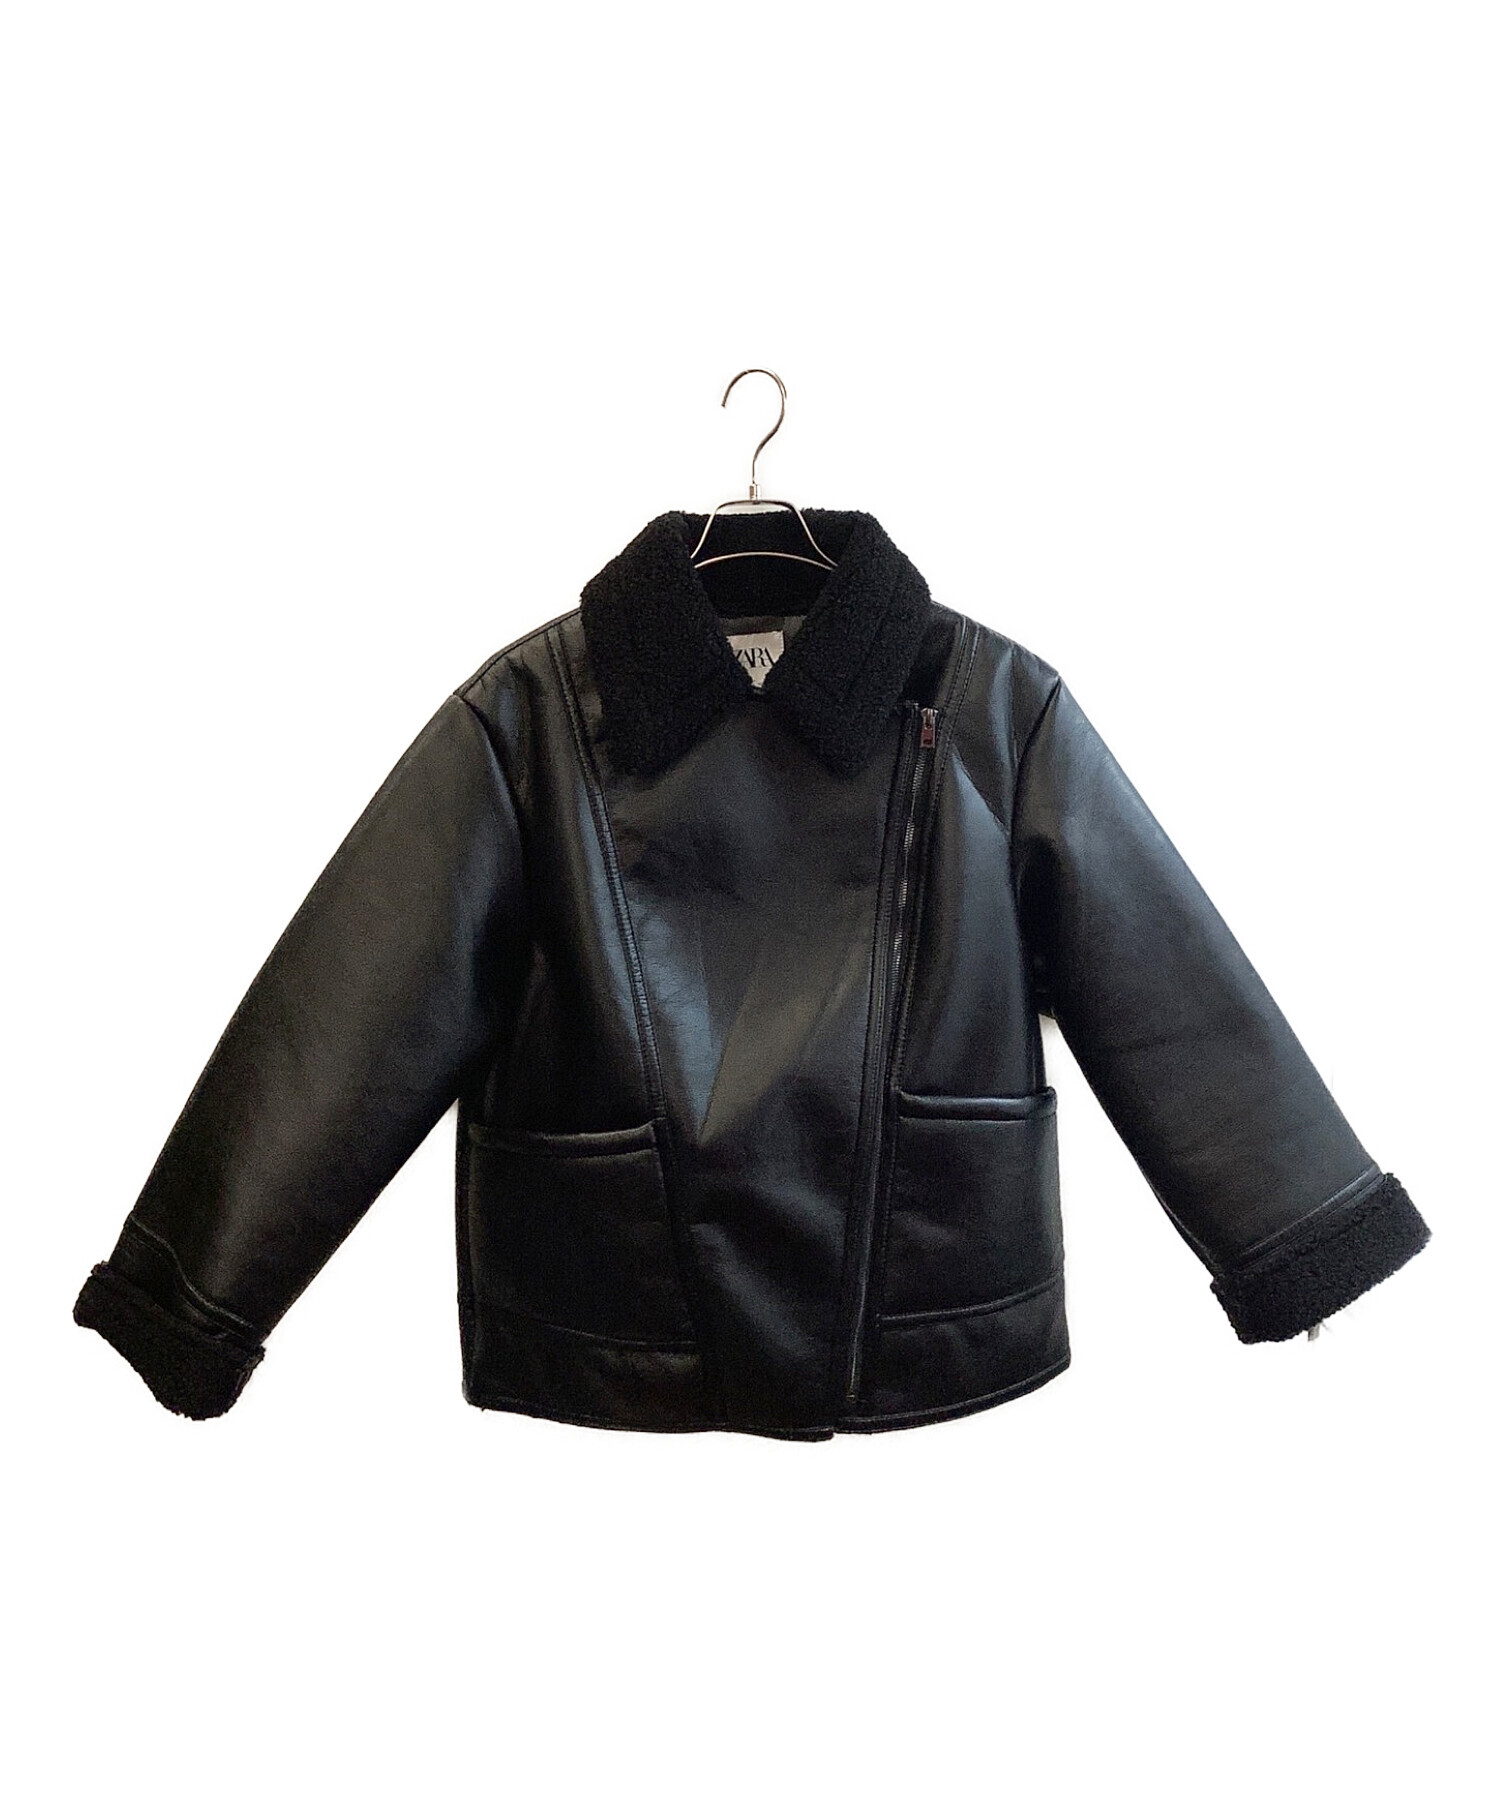 ZARA (ザラ) ダブルサイドジャケット ブラック サイズ:S